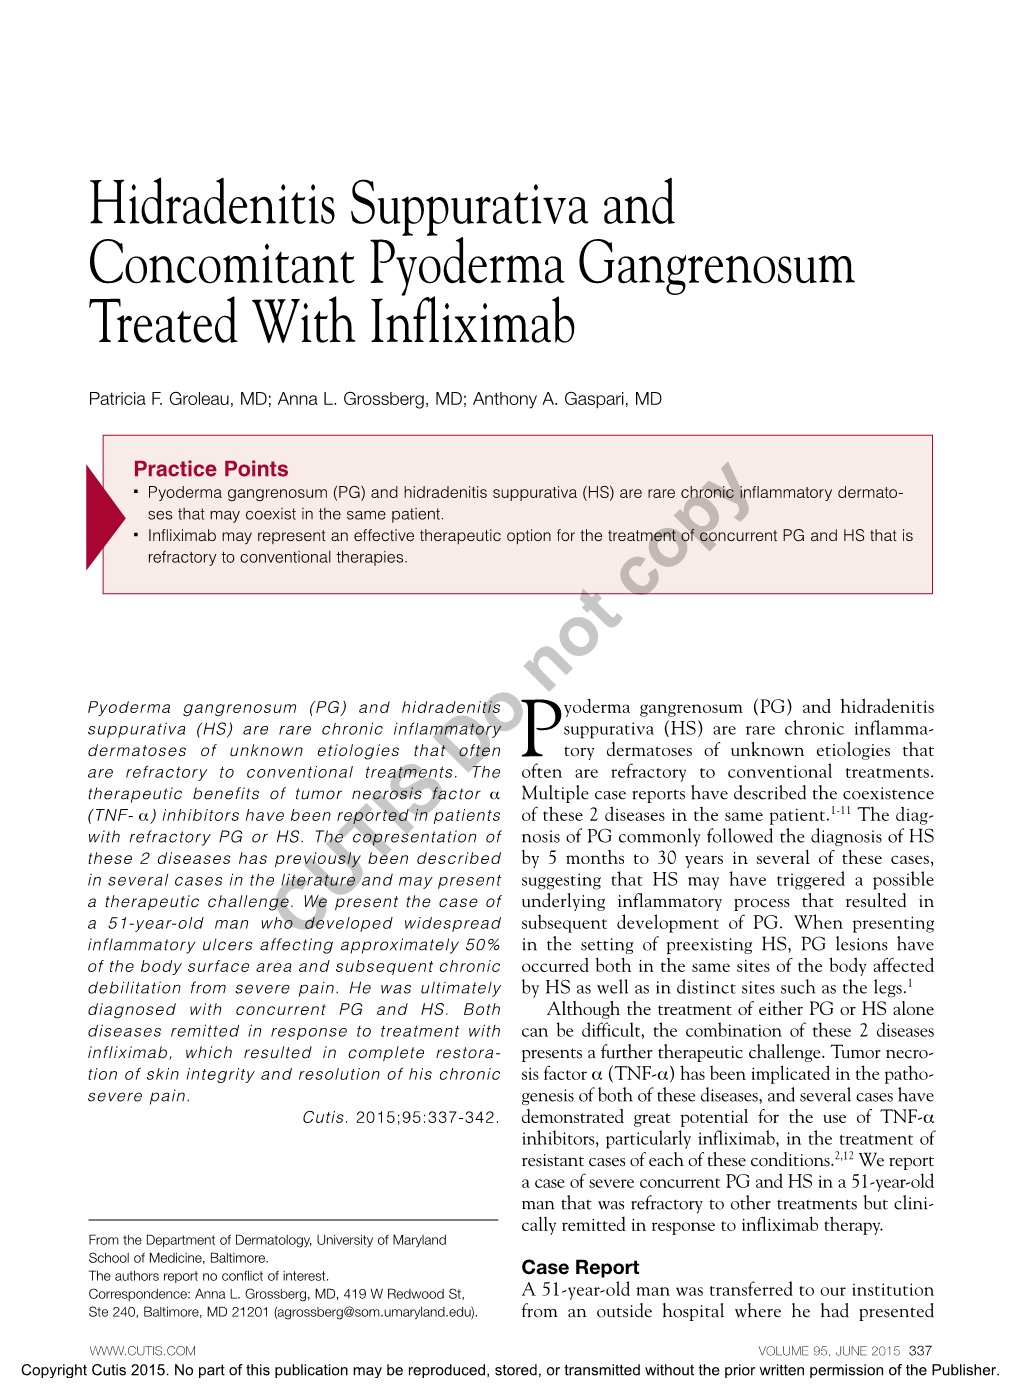 Hidradenitis Suppurativa and Concomitant Pyoderma Gangrenosum Treated with Infliximab